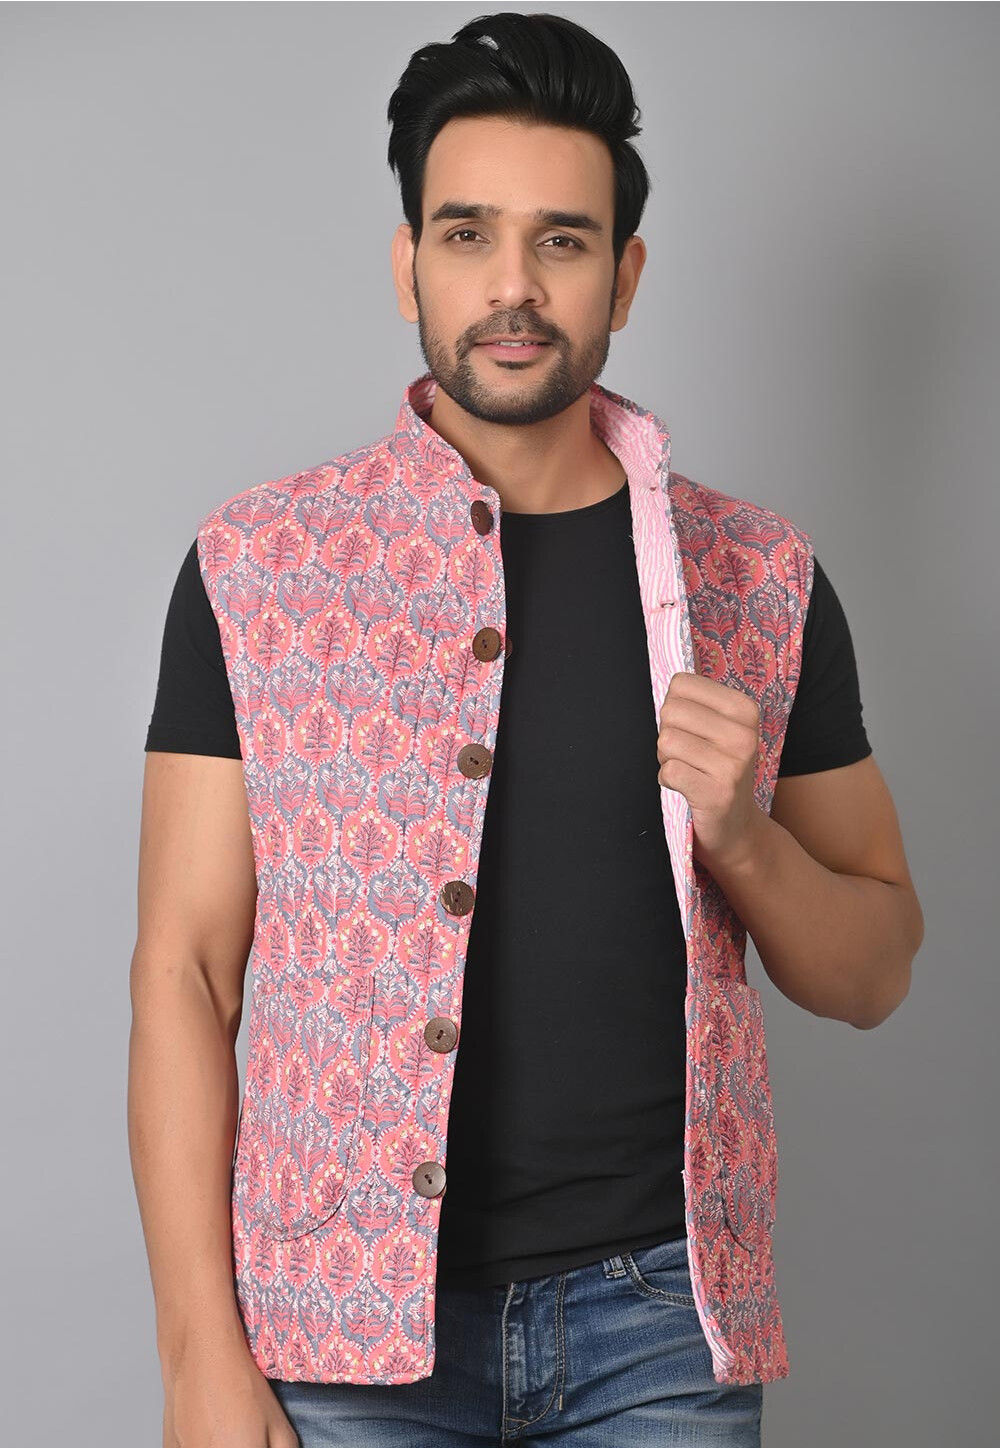 Buy Salwar Studio Men's Cotton Self weaving Black Colour sleeveless reversible  Nehru Jackets at Amazon.in